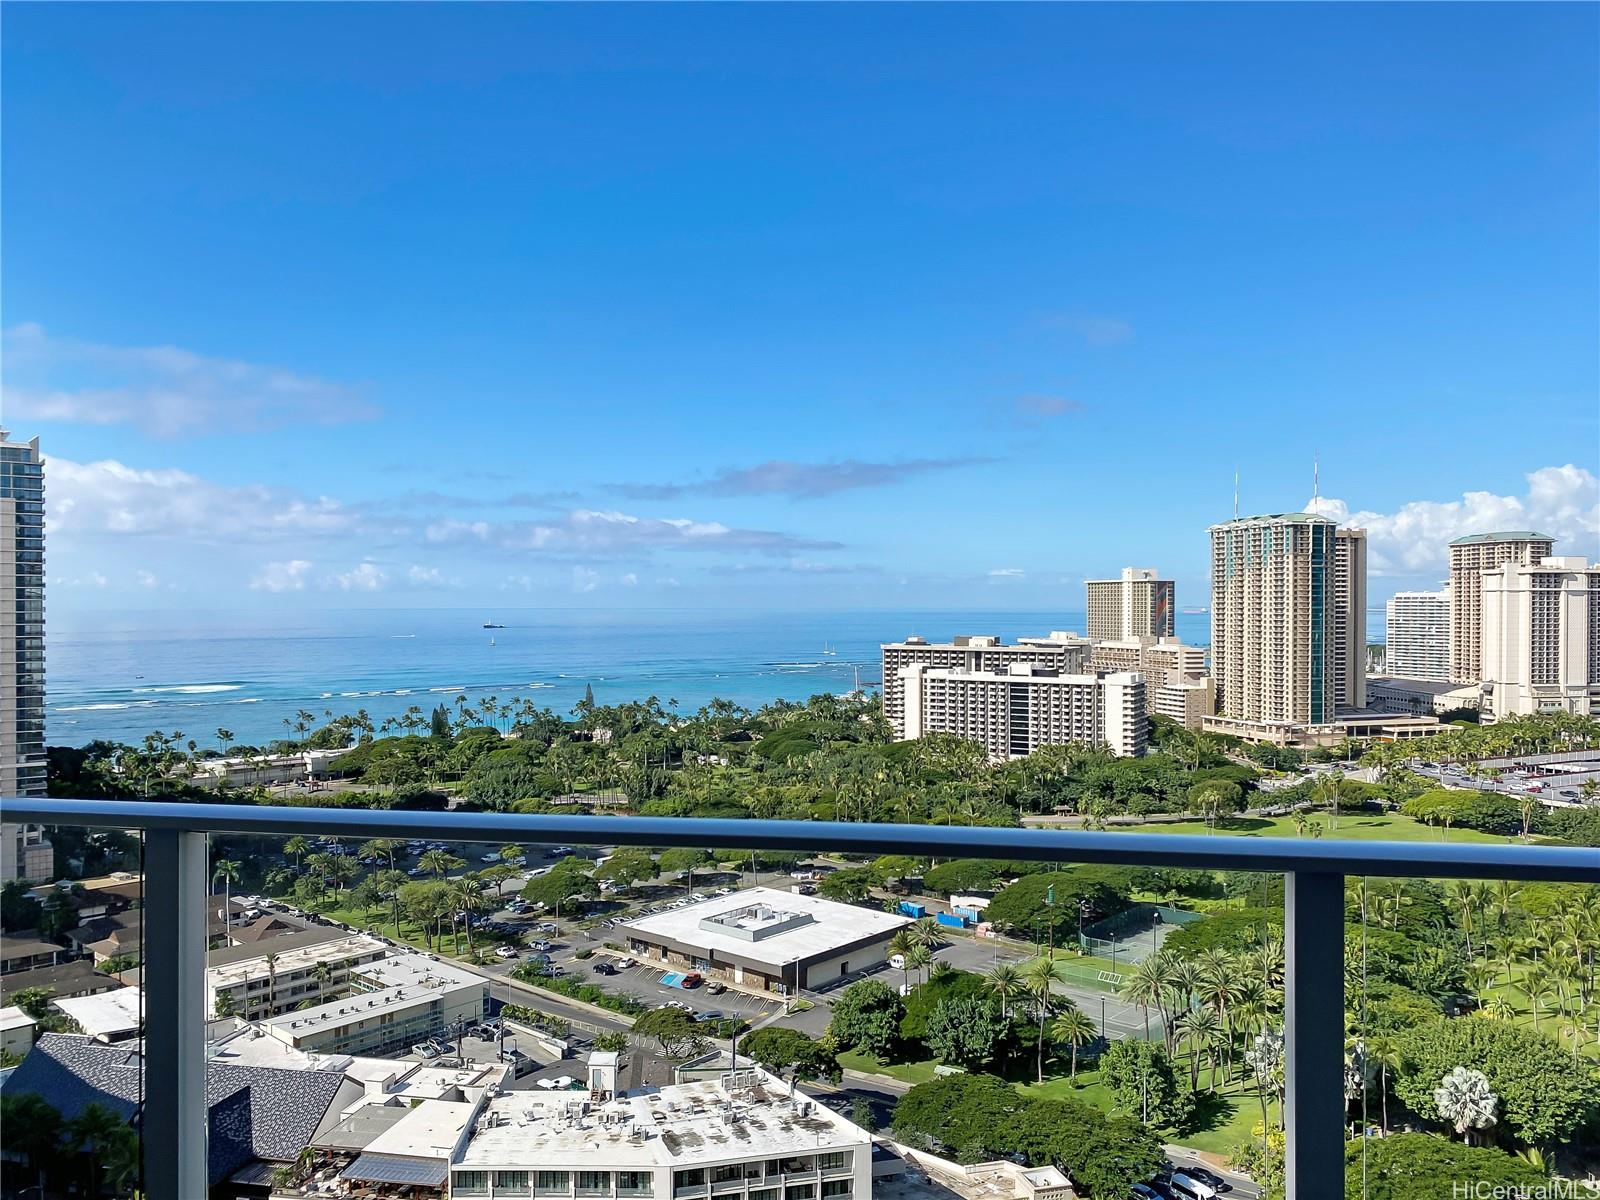 The Ritz-Carlton Residences Twr 2 - 383 Kalaimoku 2139 Kuhio Avenue #2606, Honolulu, HI 96815